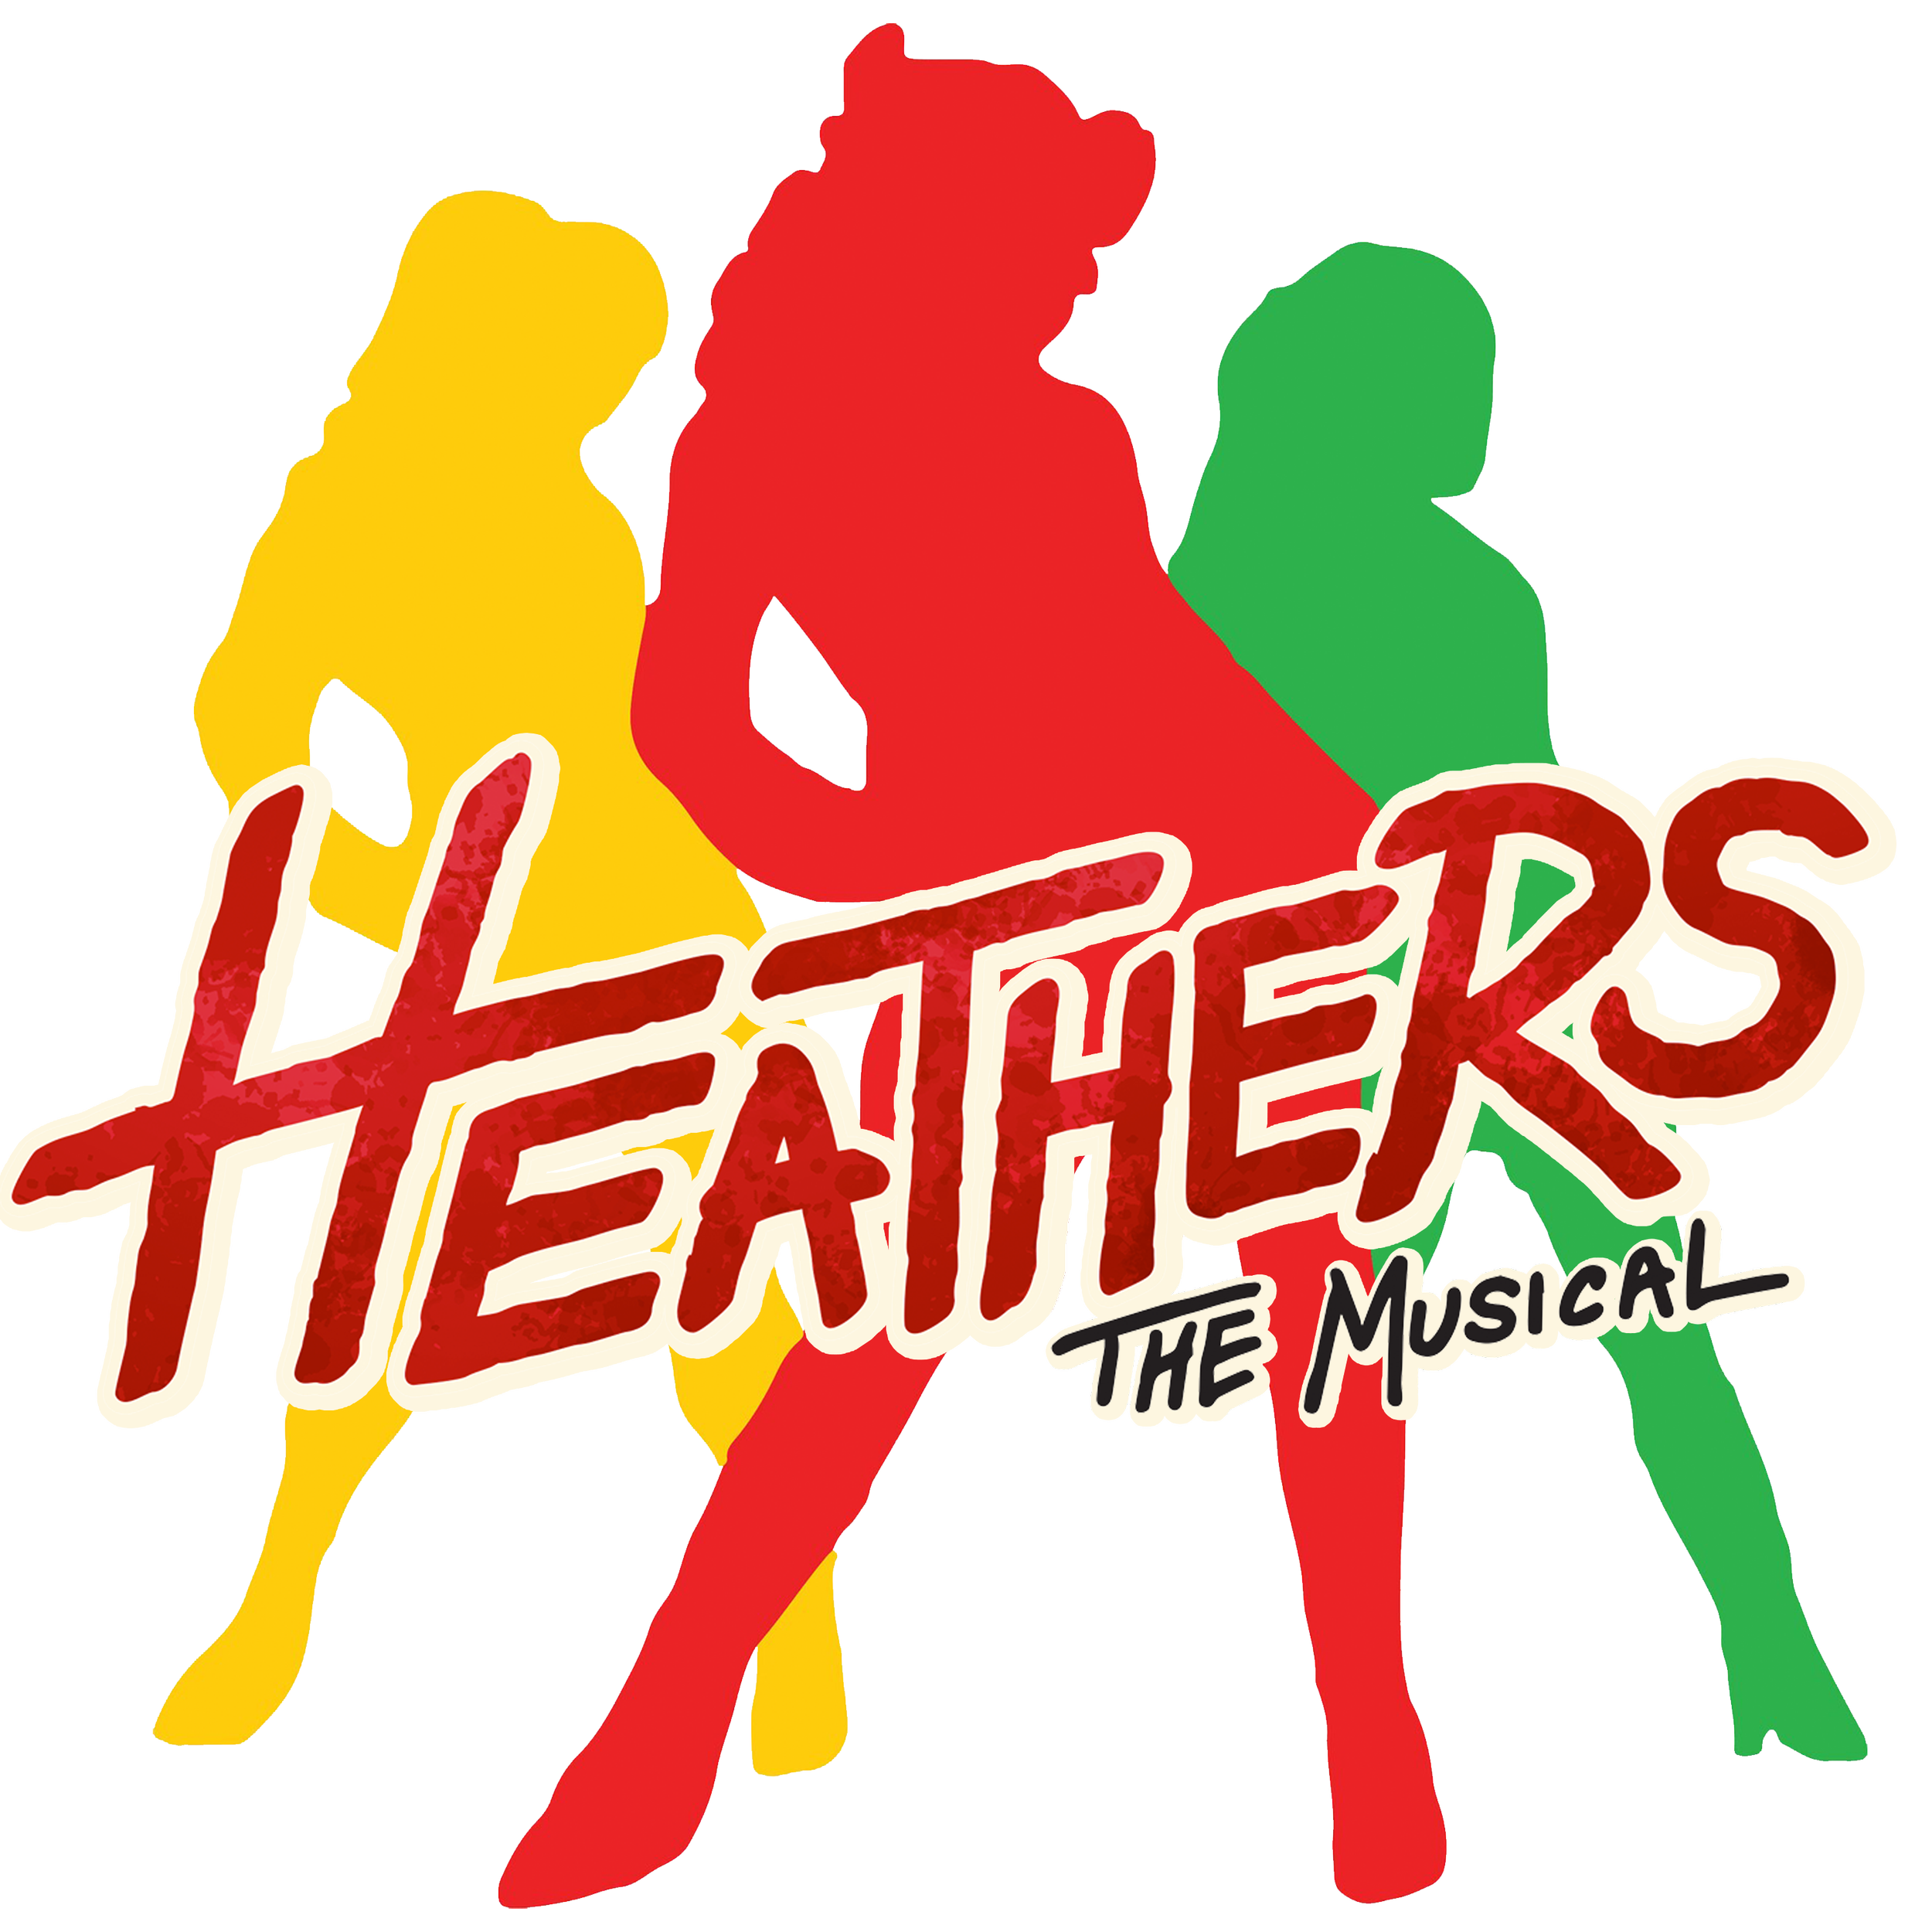 Heathers 23 logo.png